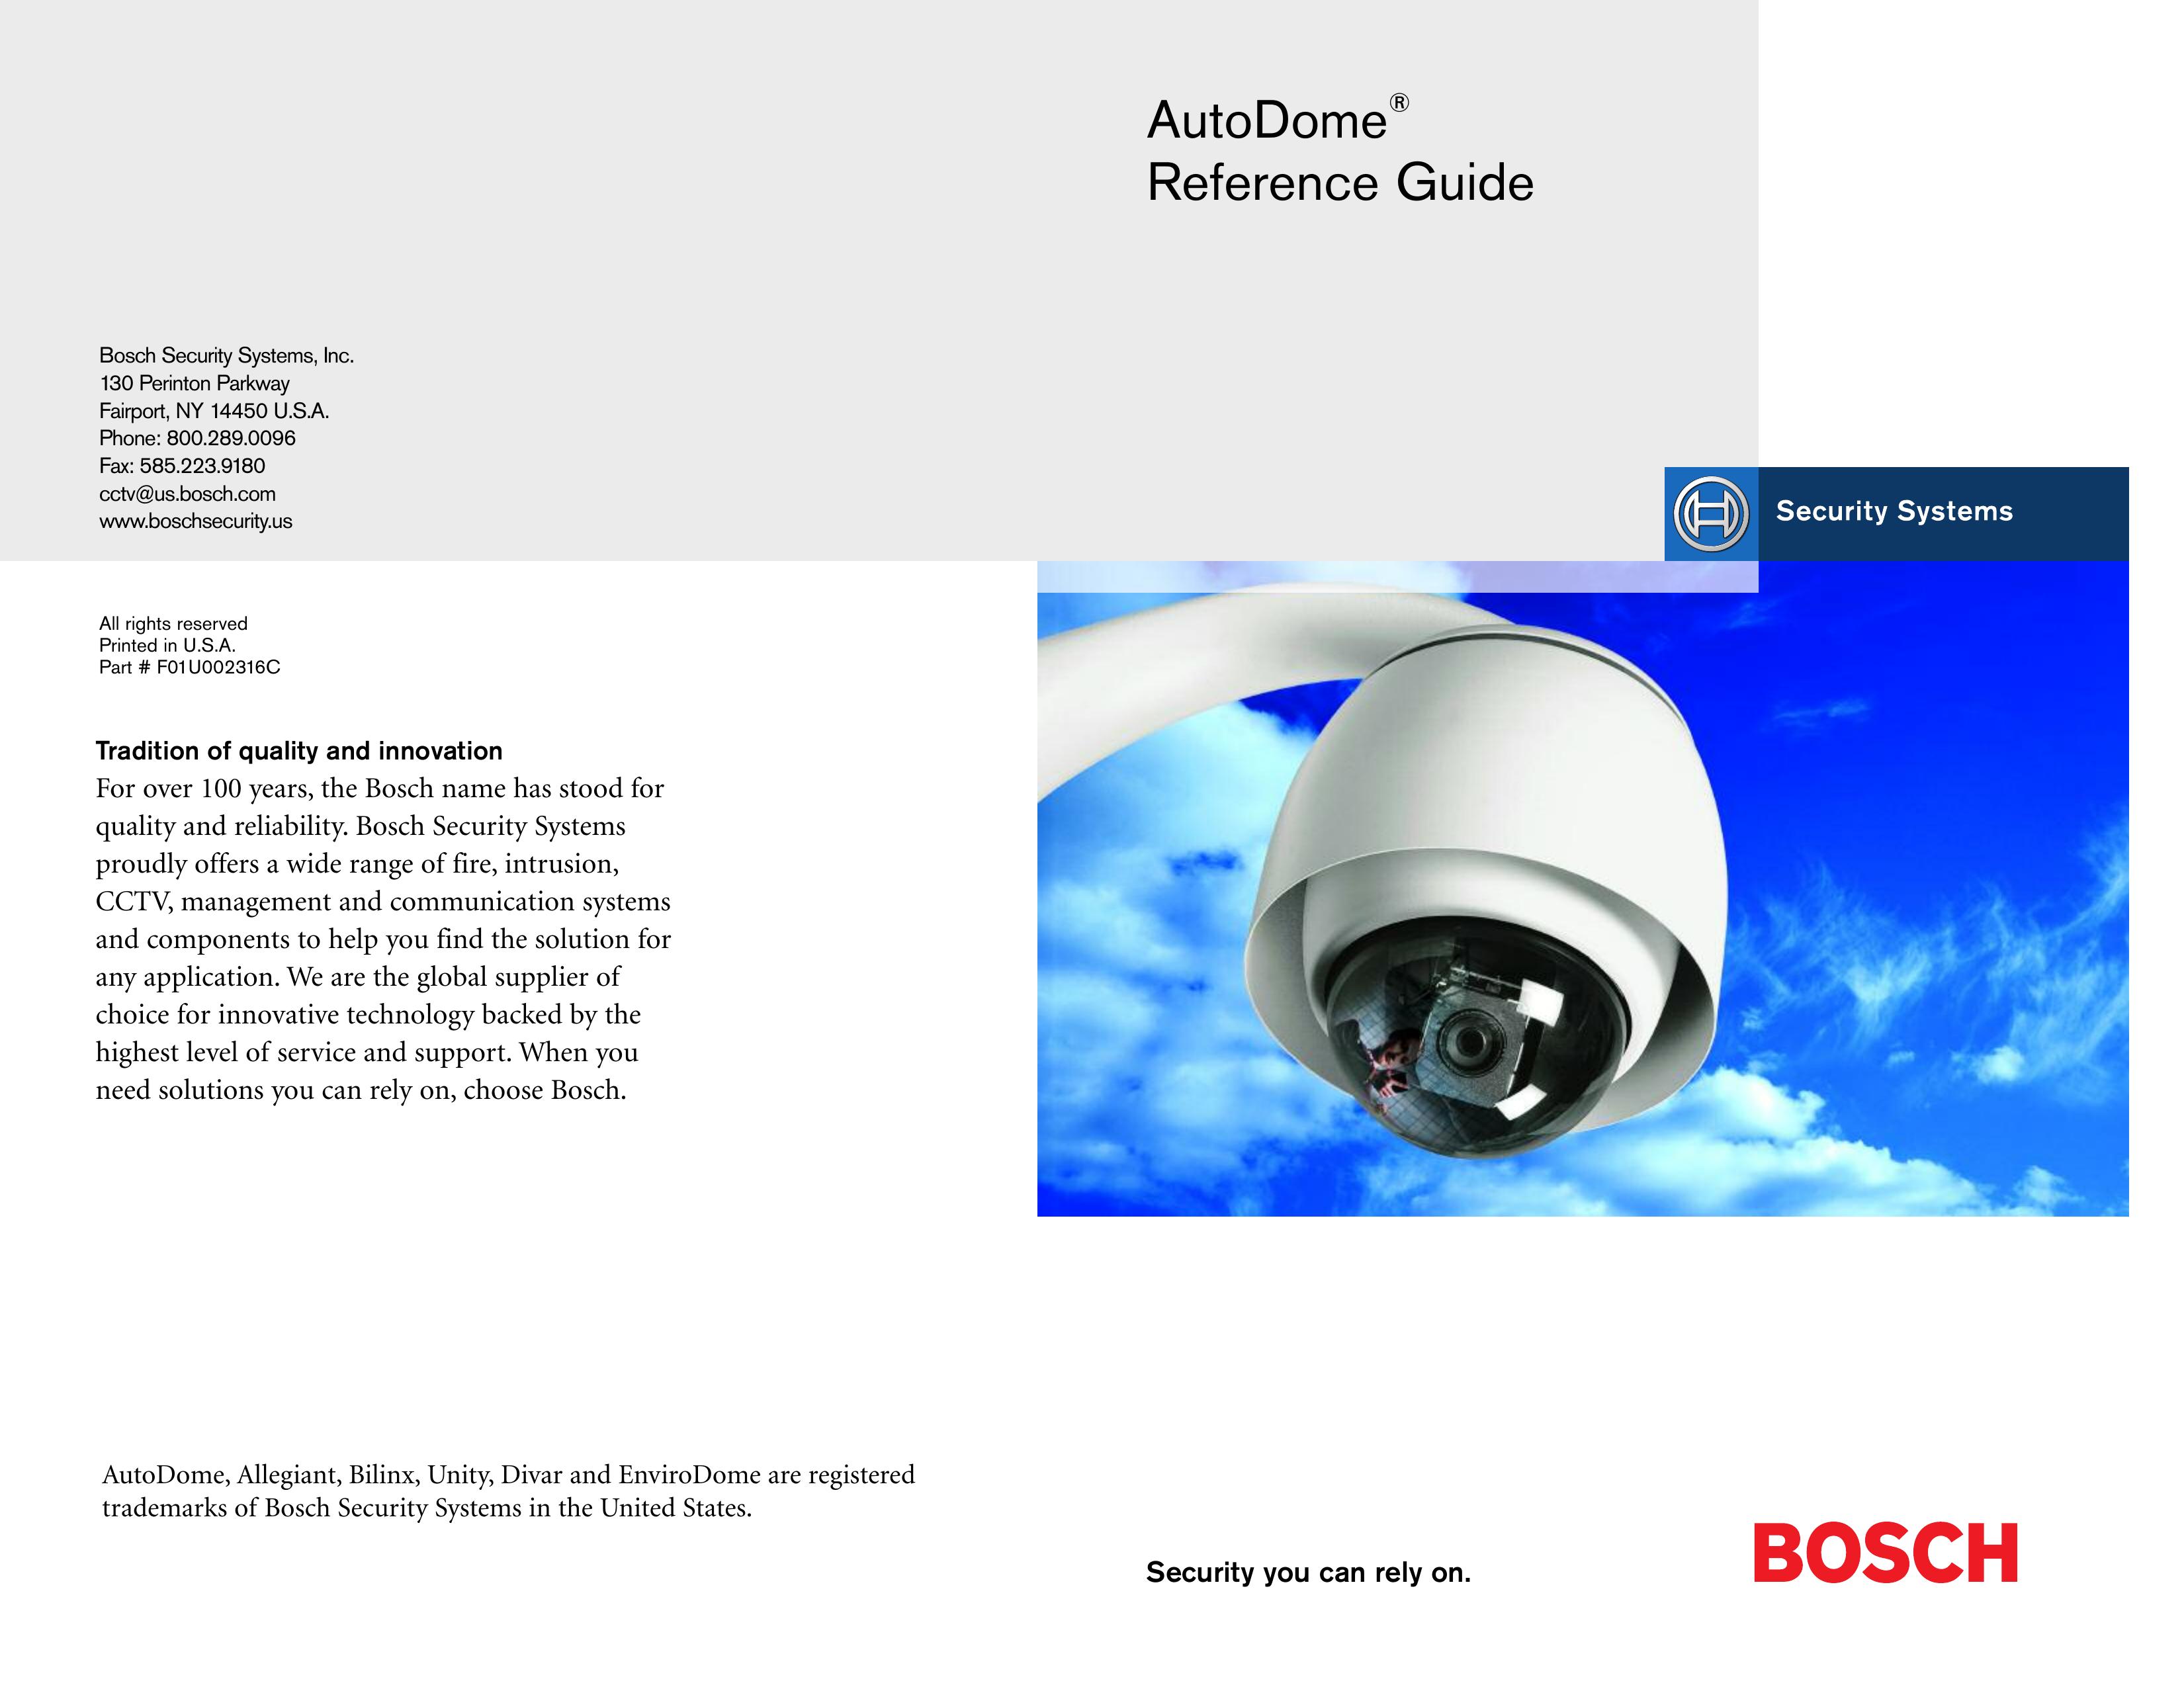 Bosch Appliances F01U002316C Security Camera User Manual